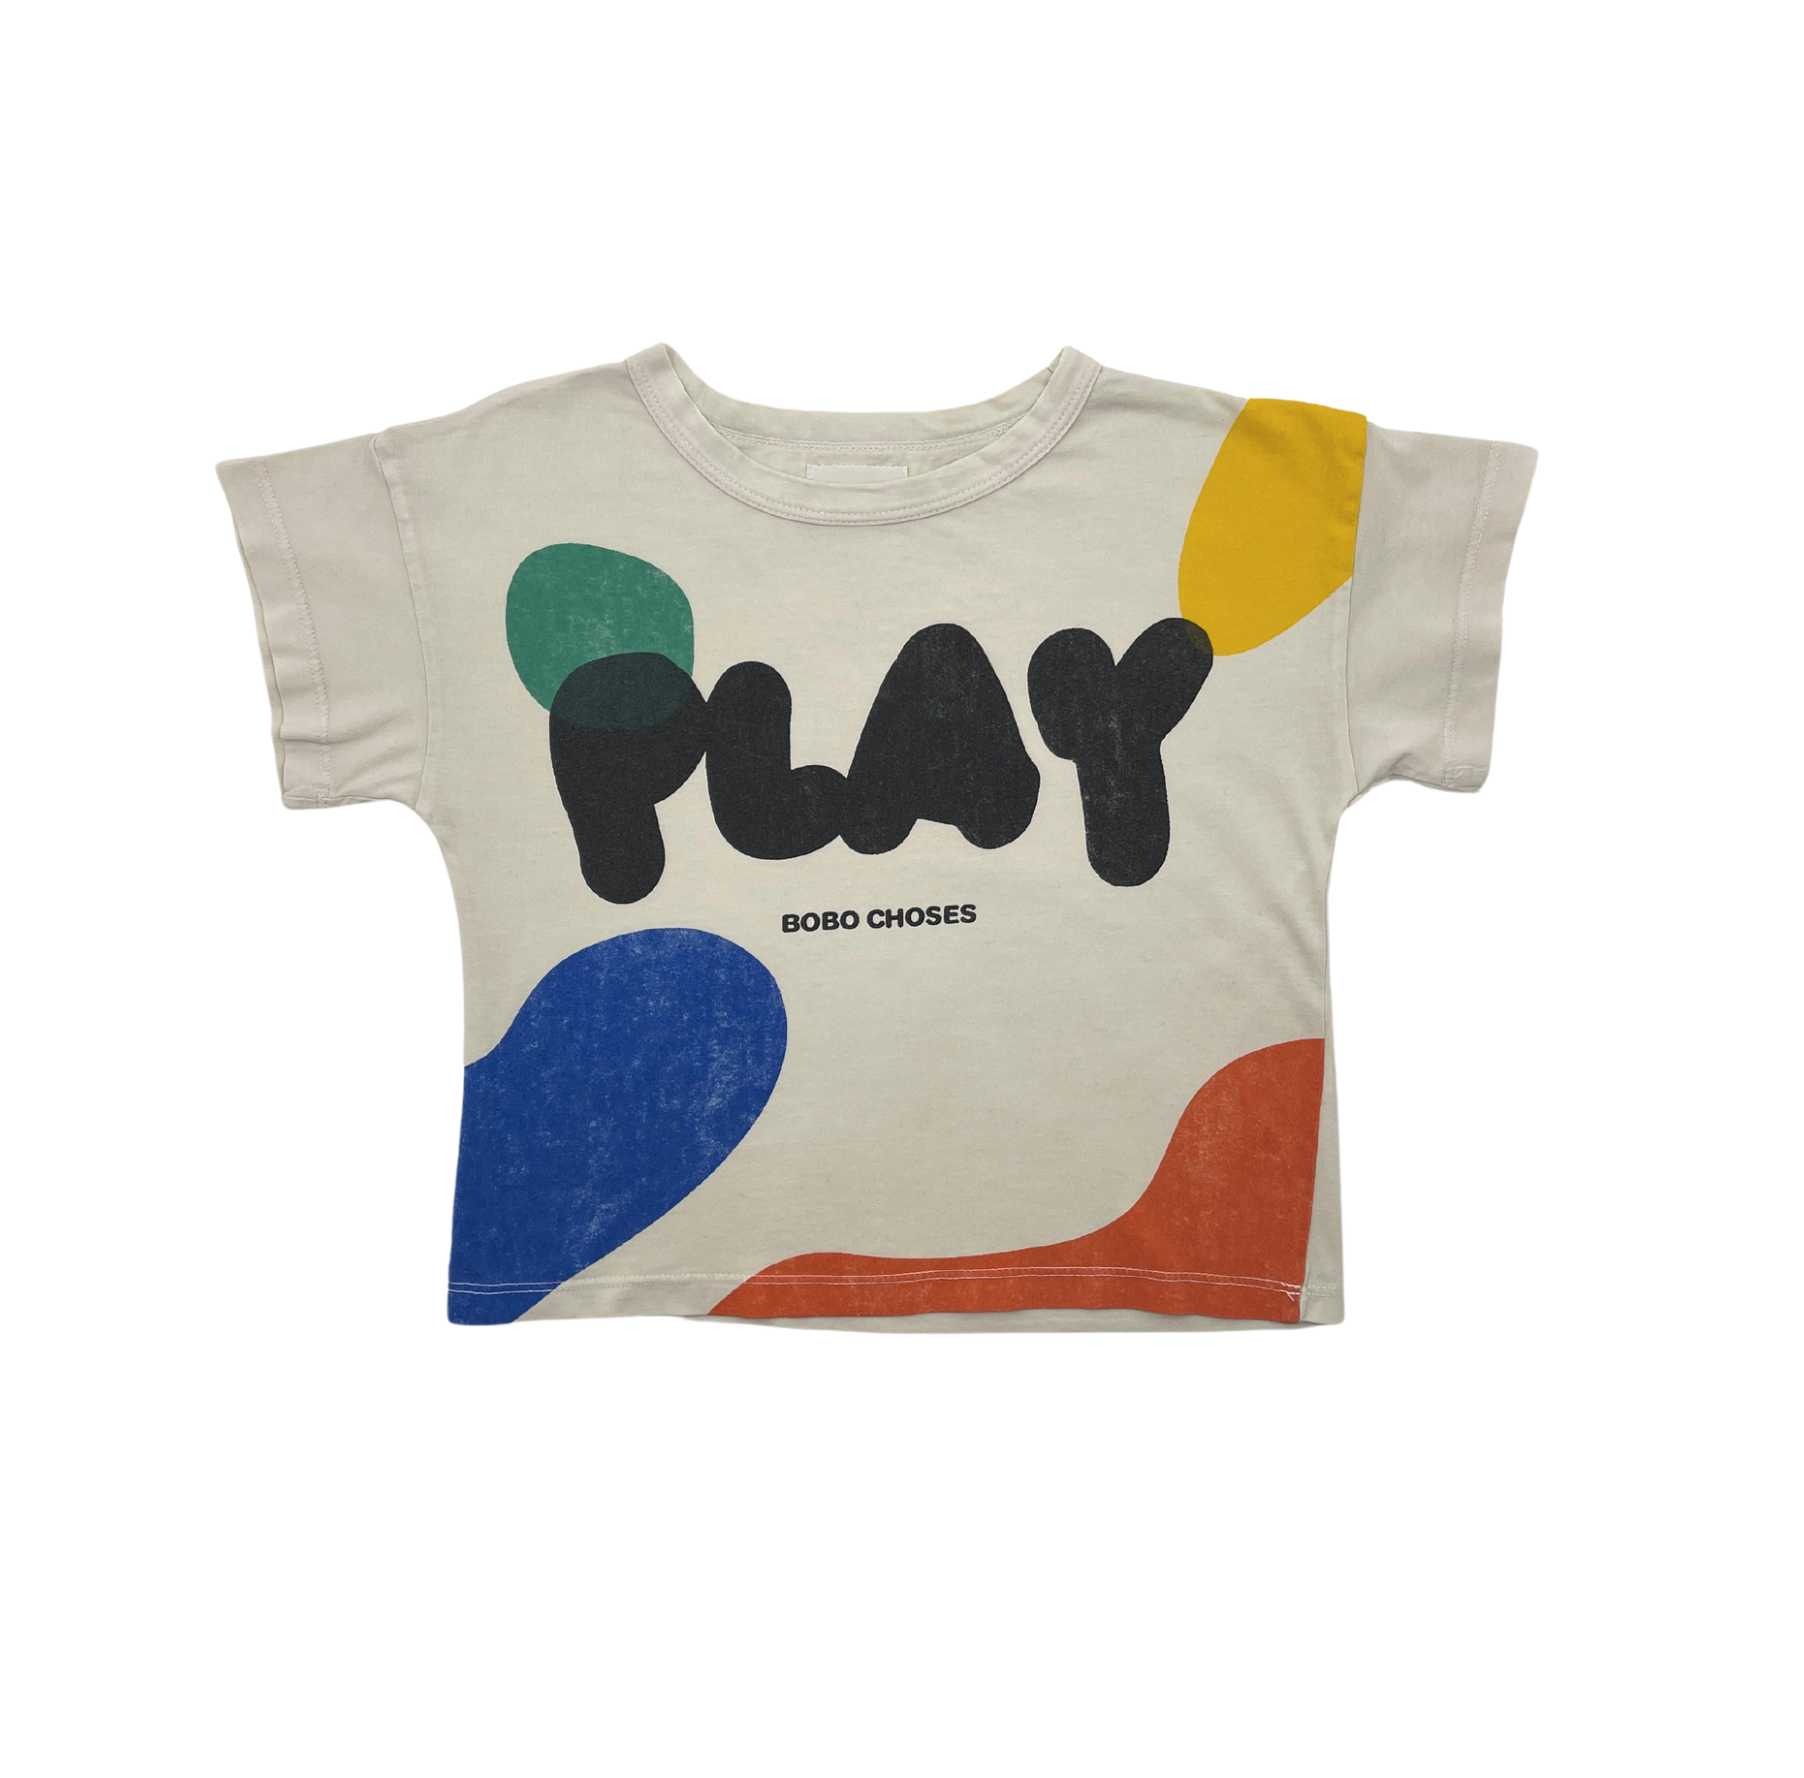 BOBO CHOSES - "Play" T-shirt - 2/3 years